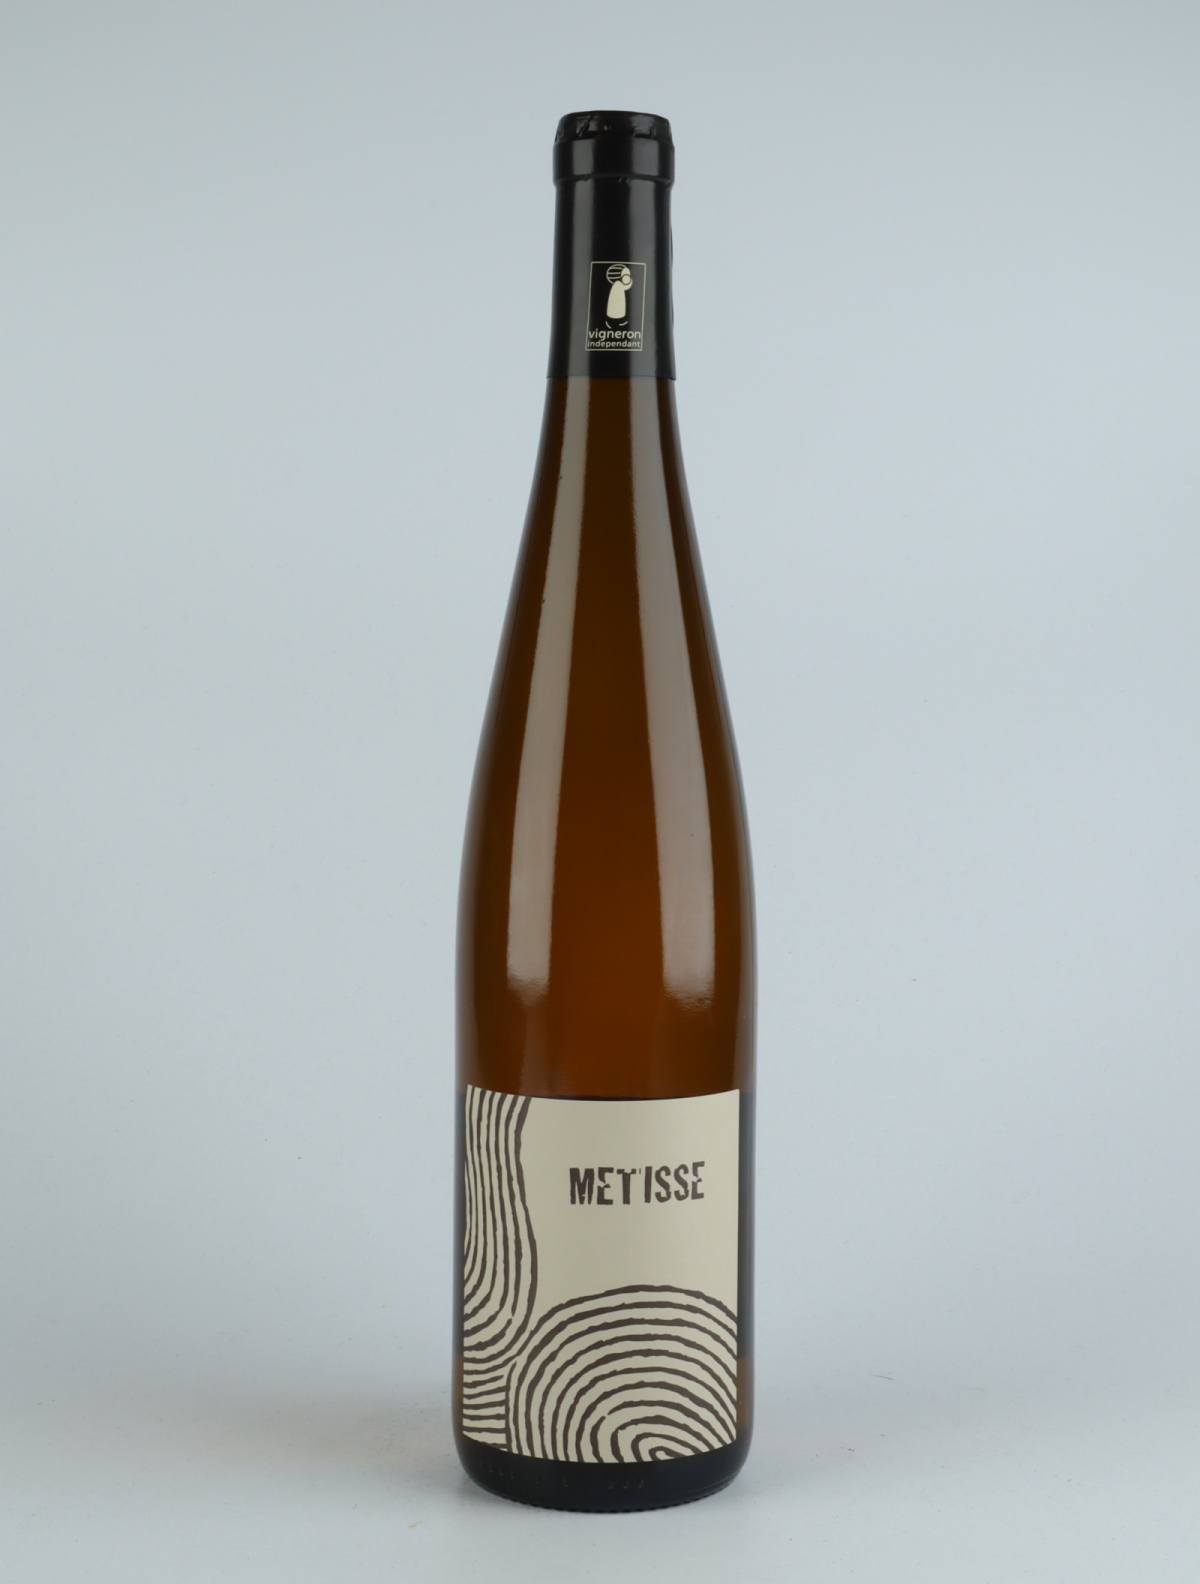 A bottle 2020 Métisse Orange wine from Ruhlmann Dirringer, Alsace in France